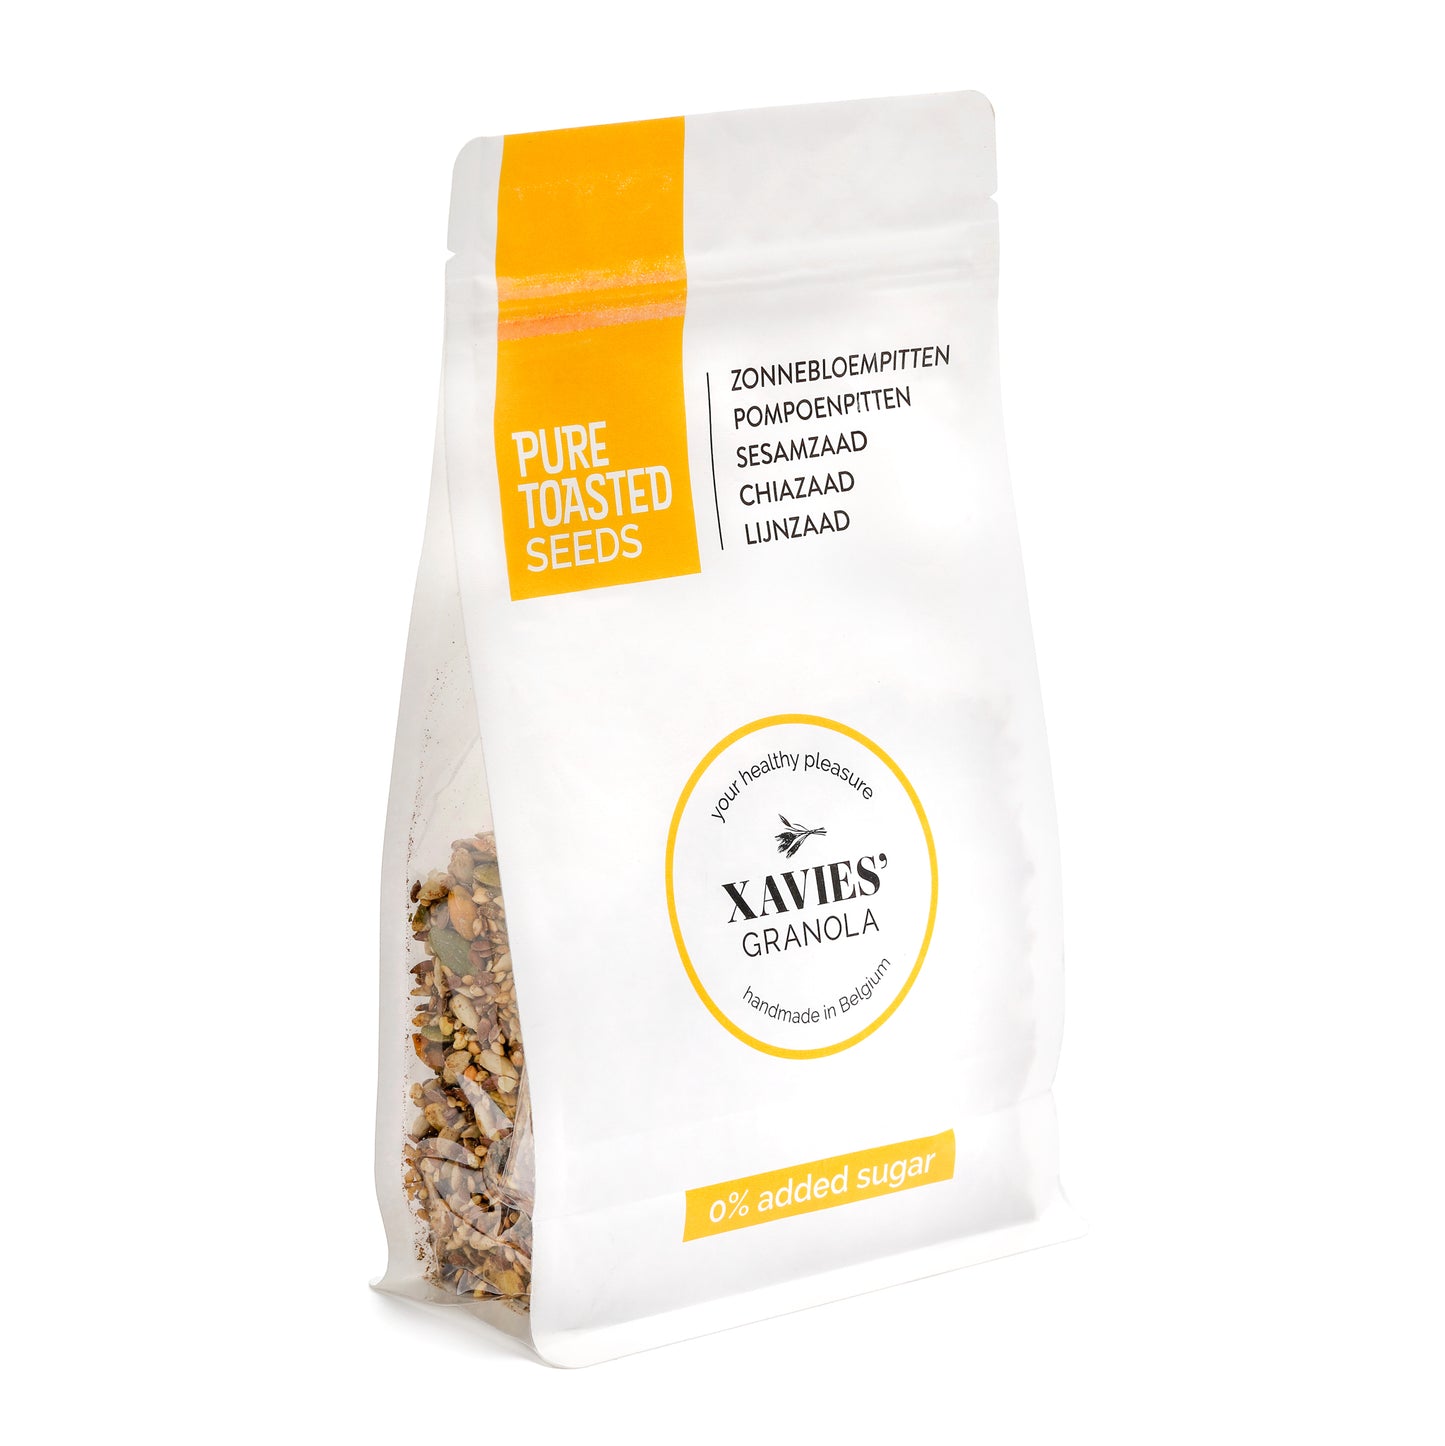 XAVIES' Pure Toasted Seeds Granola